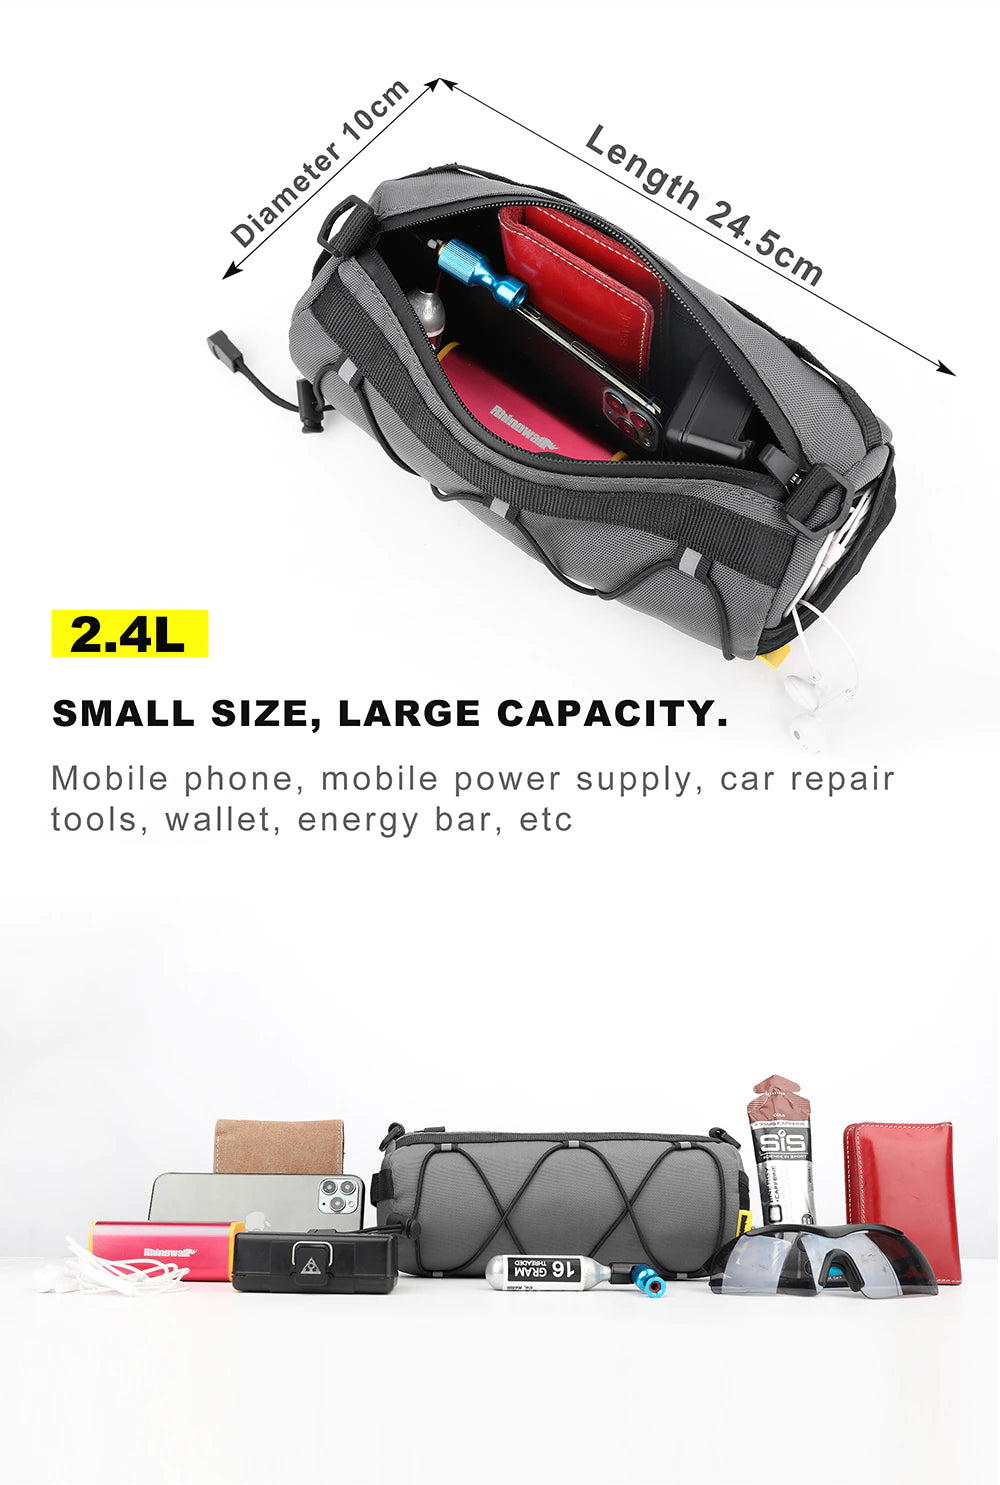 2.4L Bike Bag Portable Handlebar High Visibility Reflective